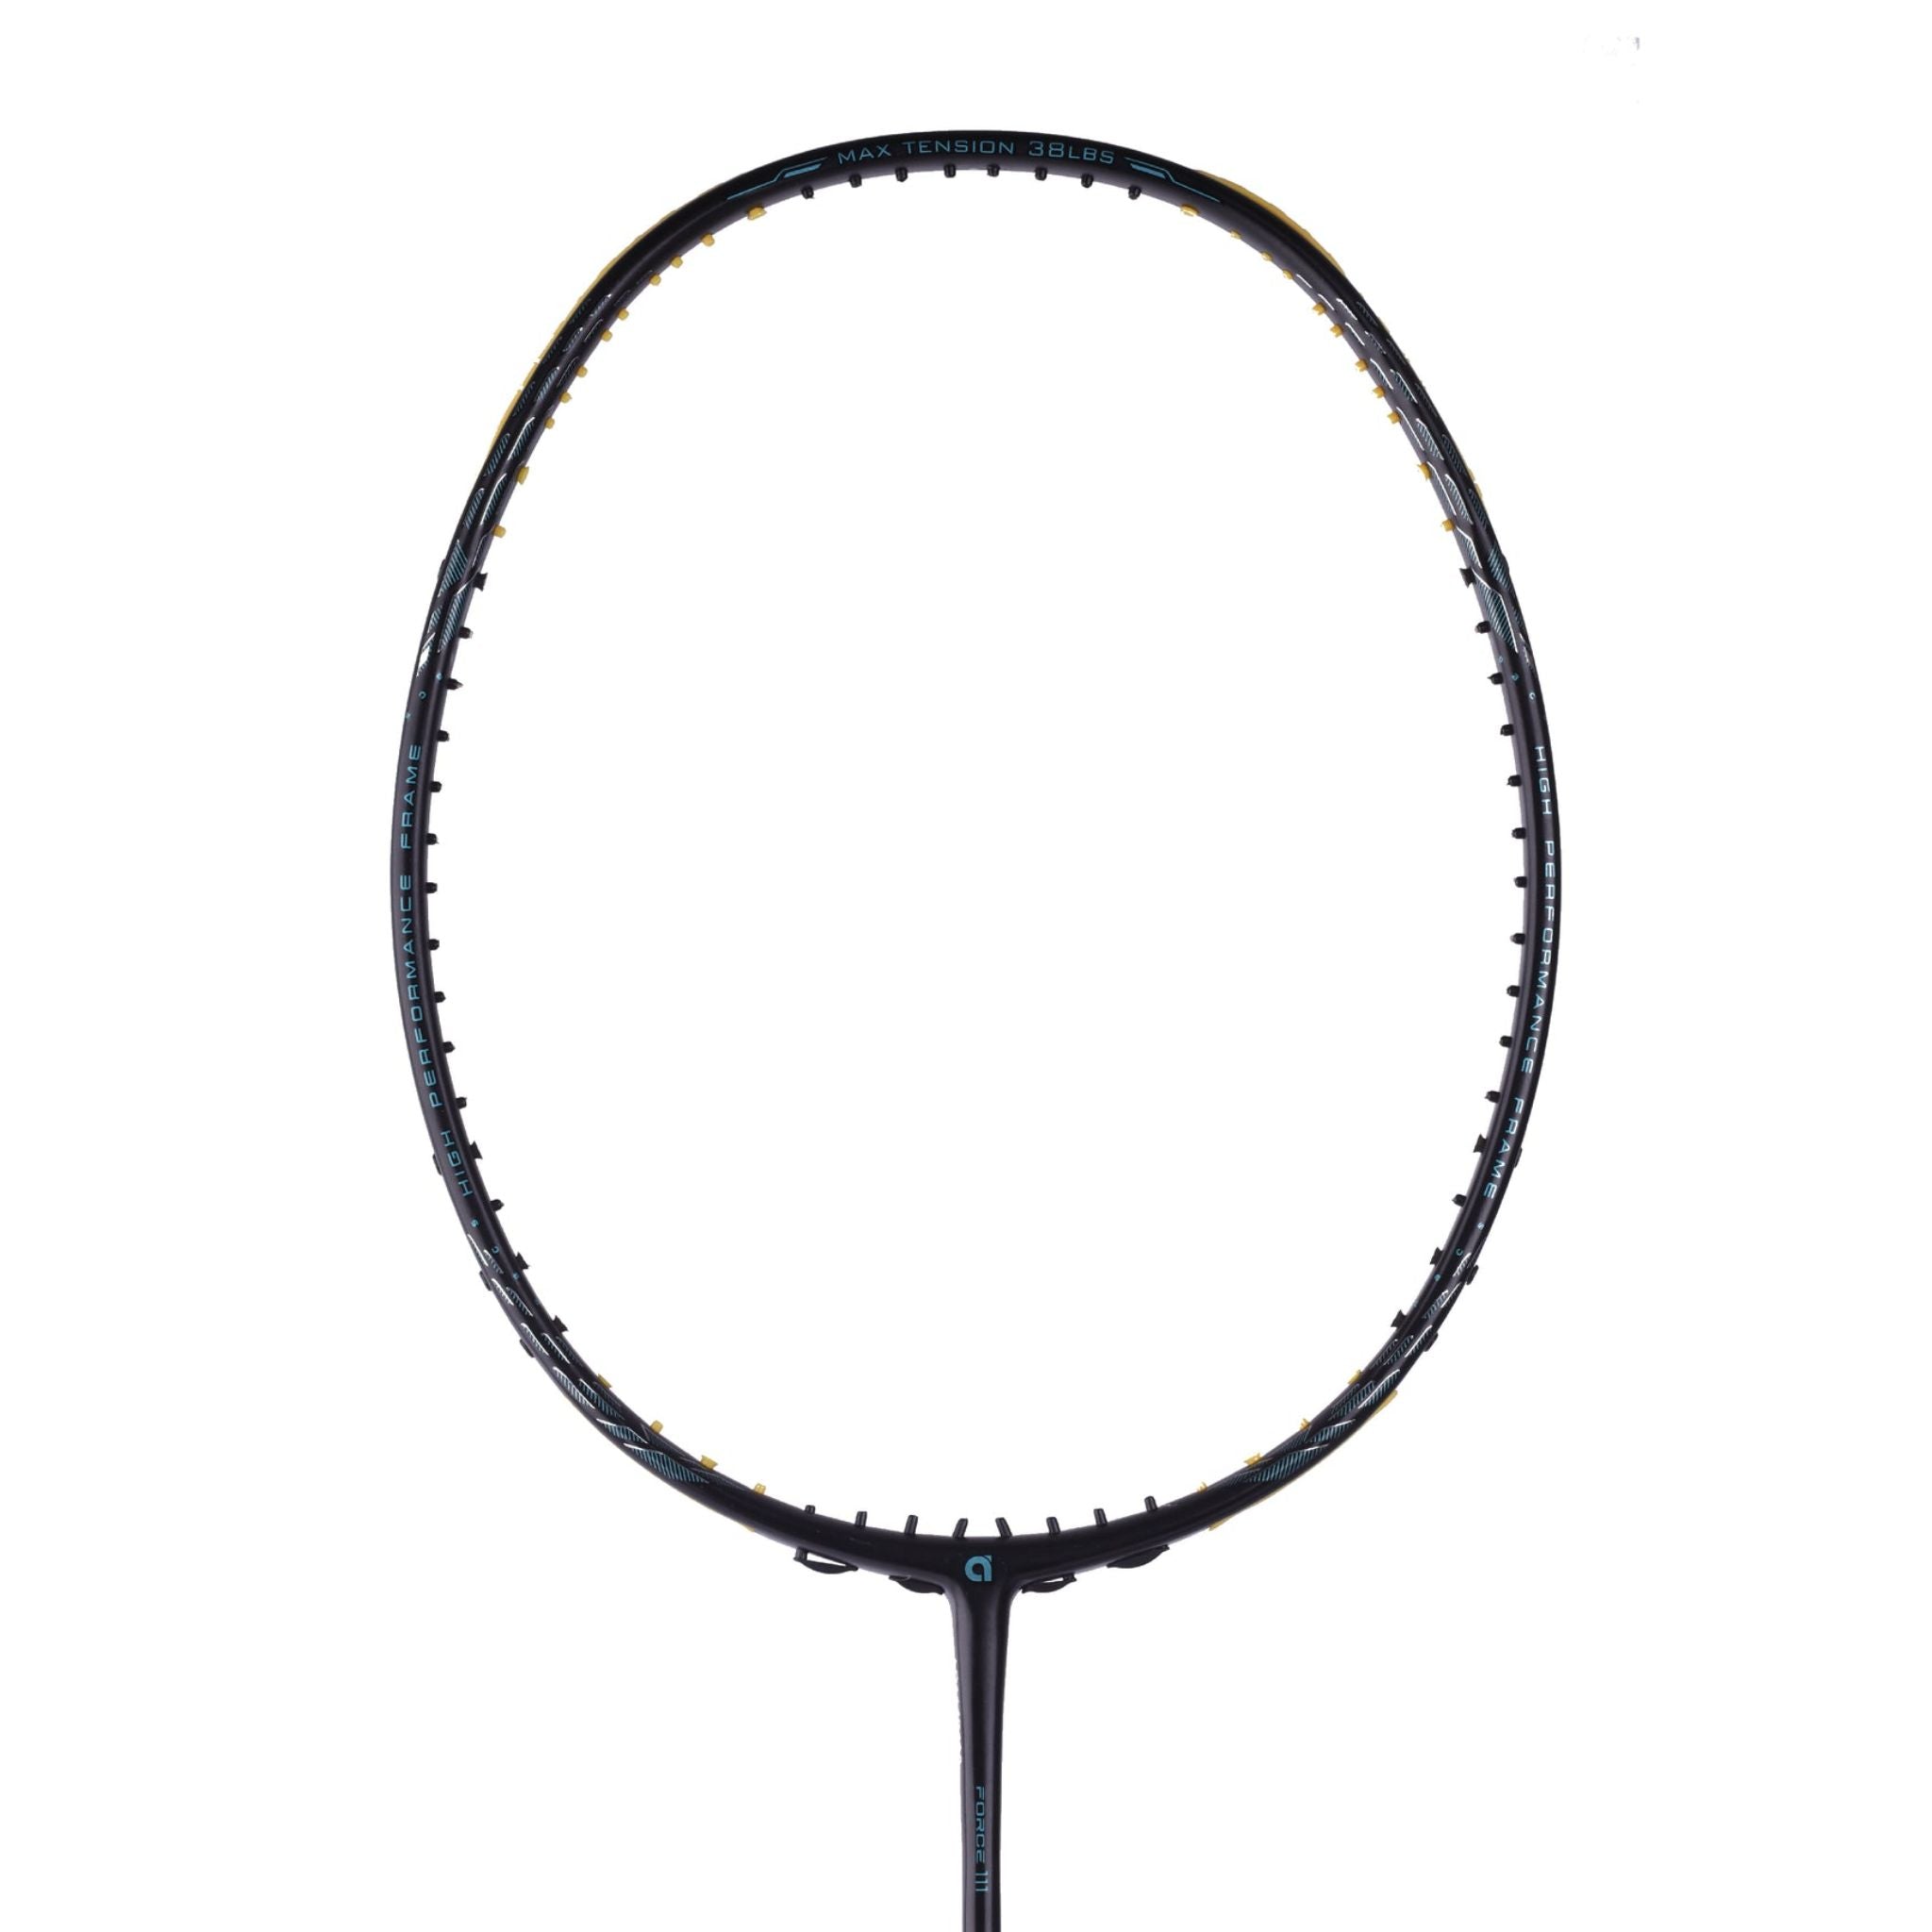 APACS N Force III Badminton Racket